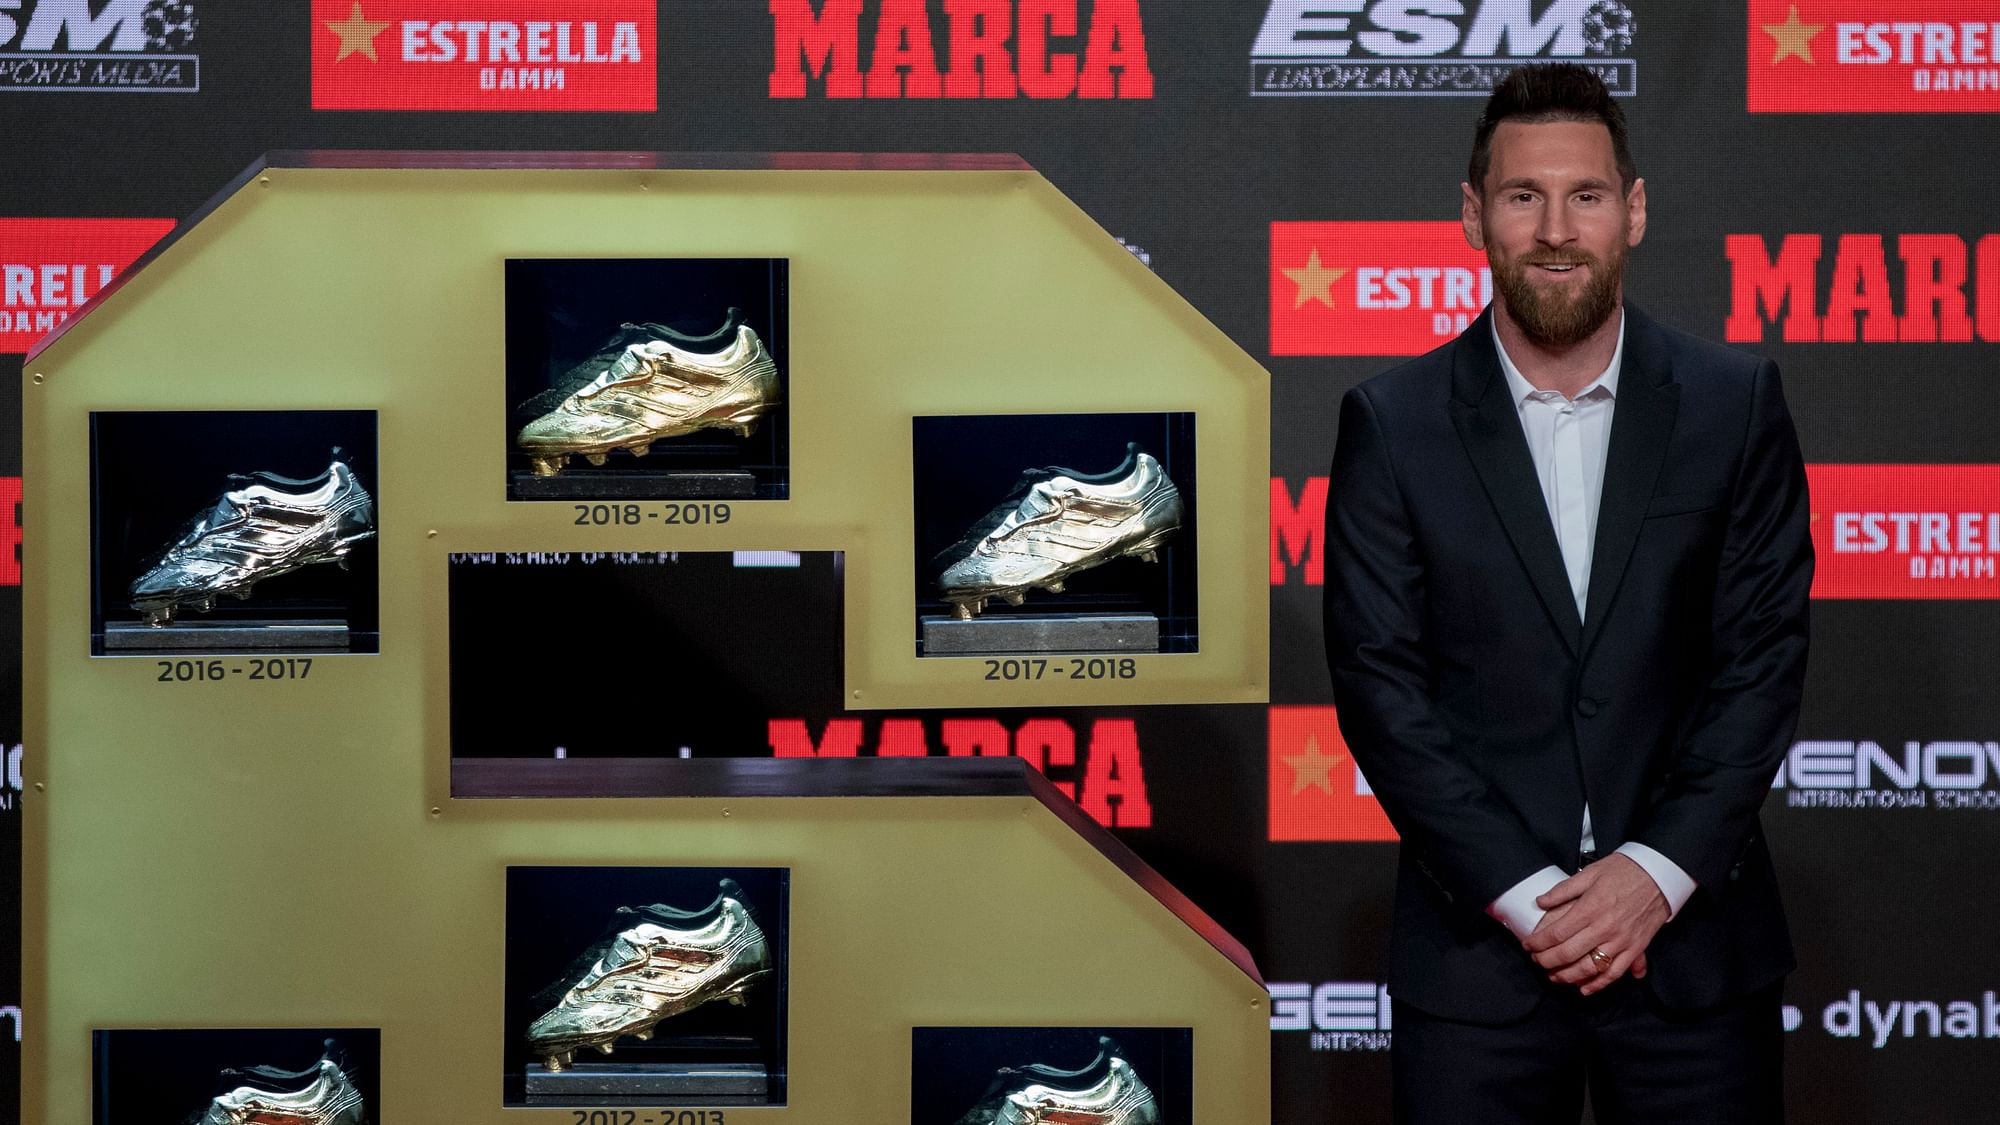 Lionel Messi has won the 2018/19 European Golden Shoe award.